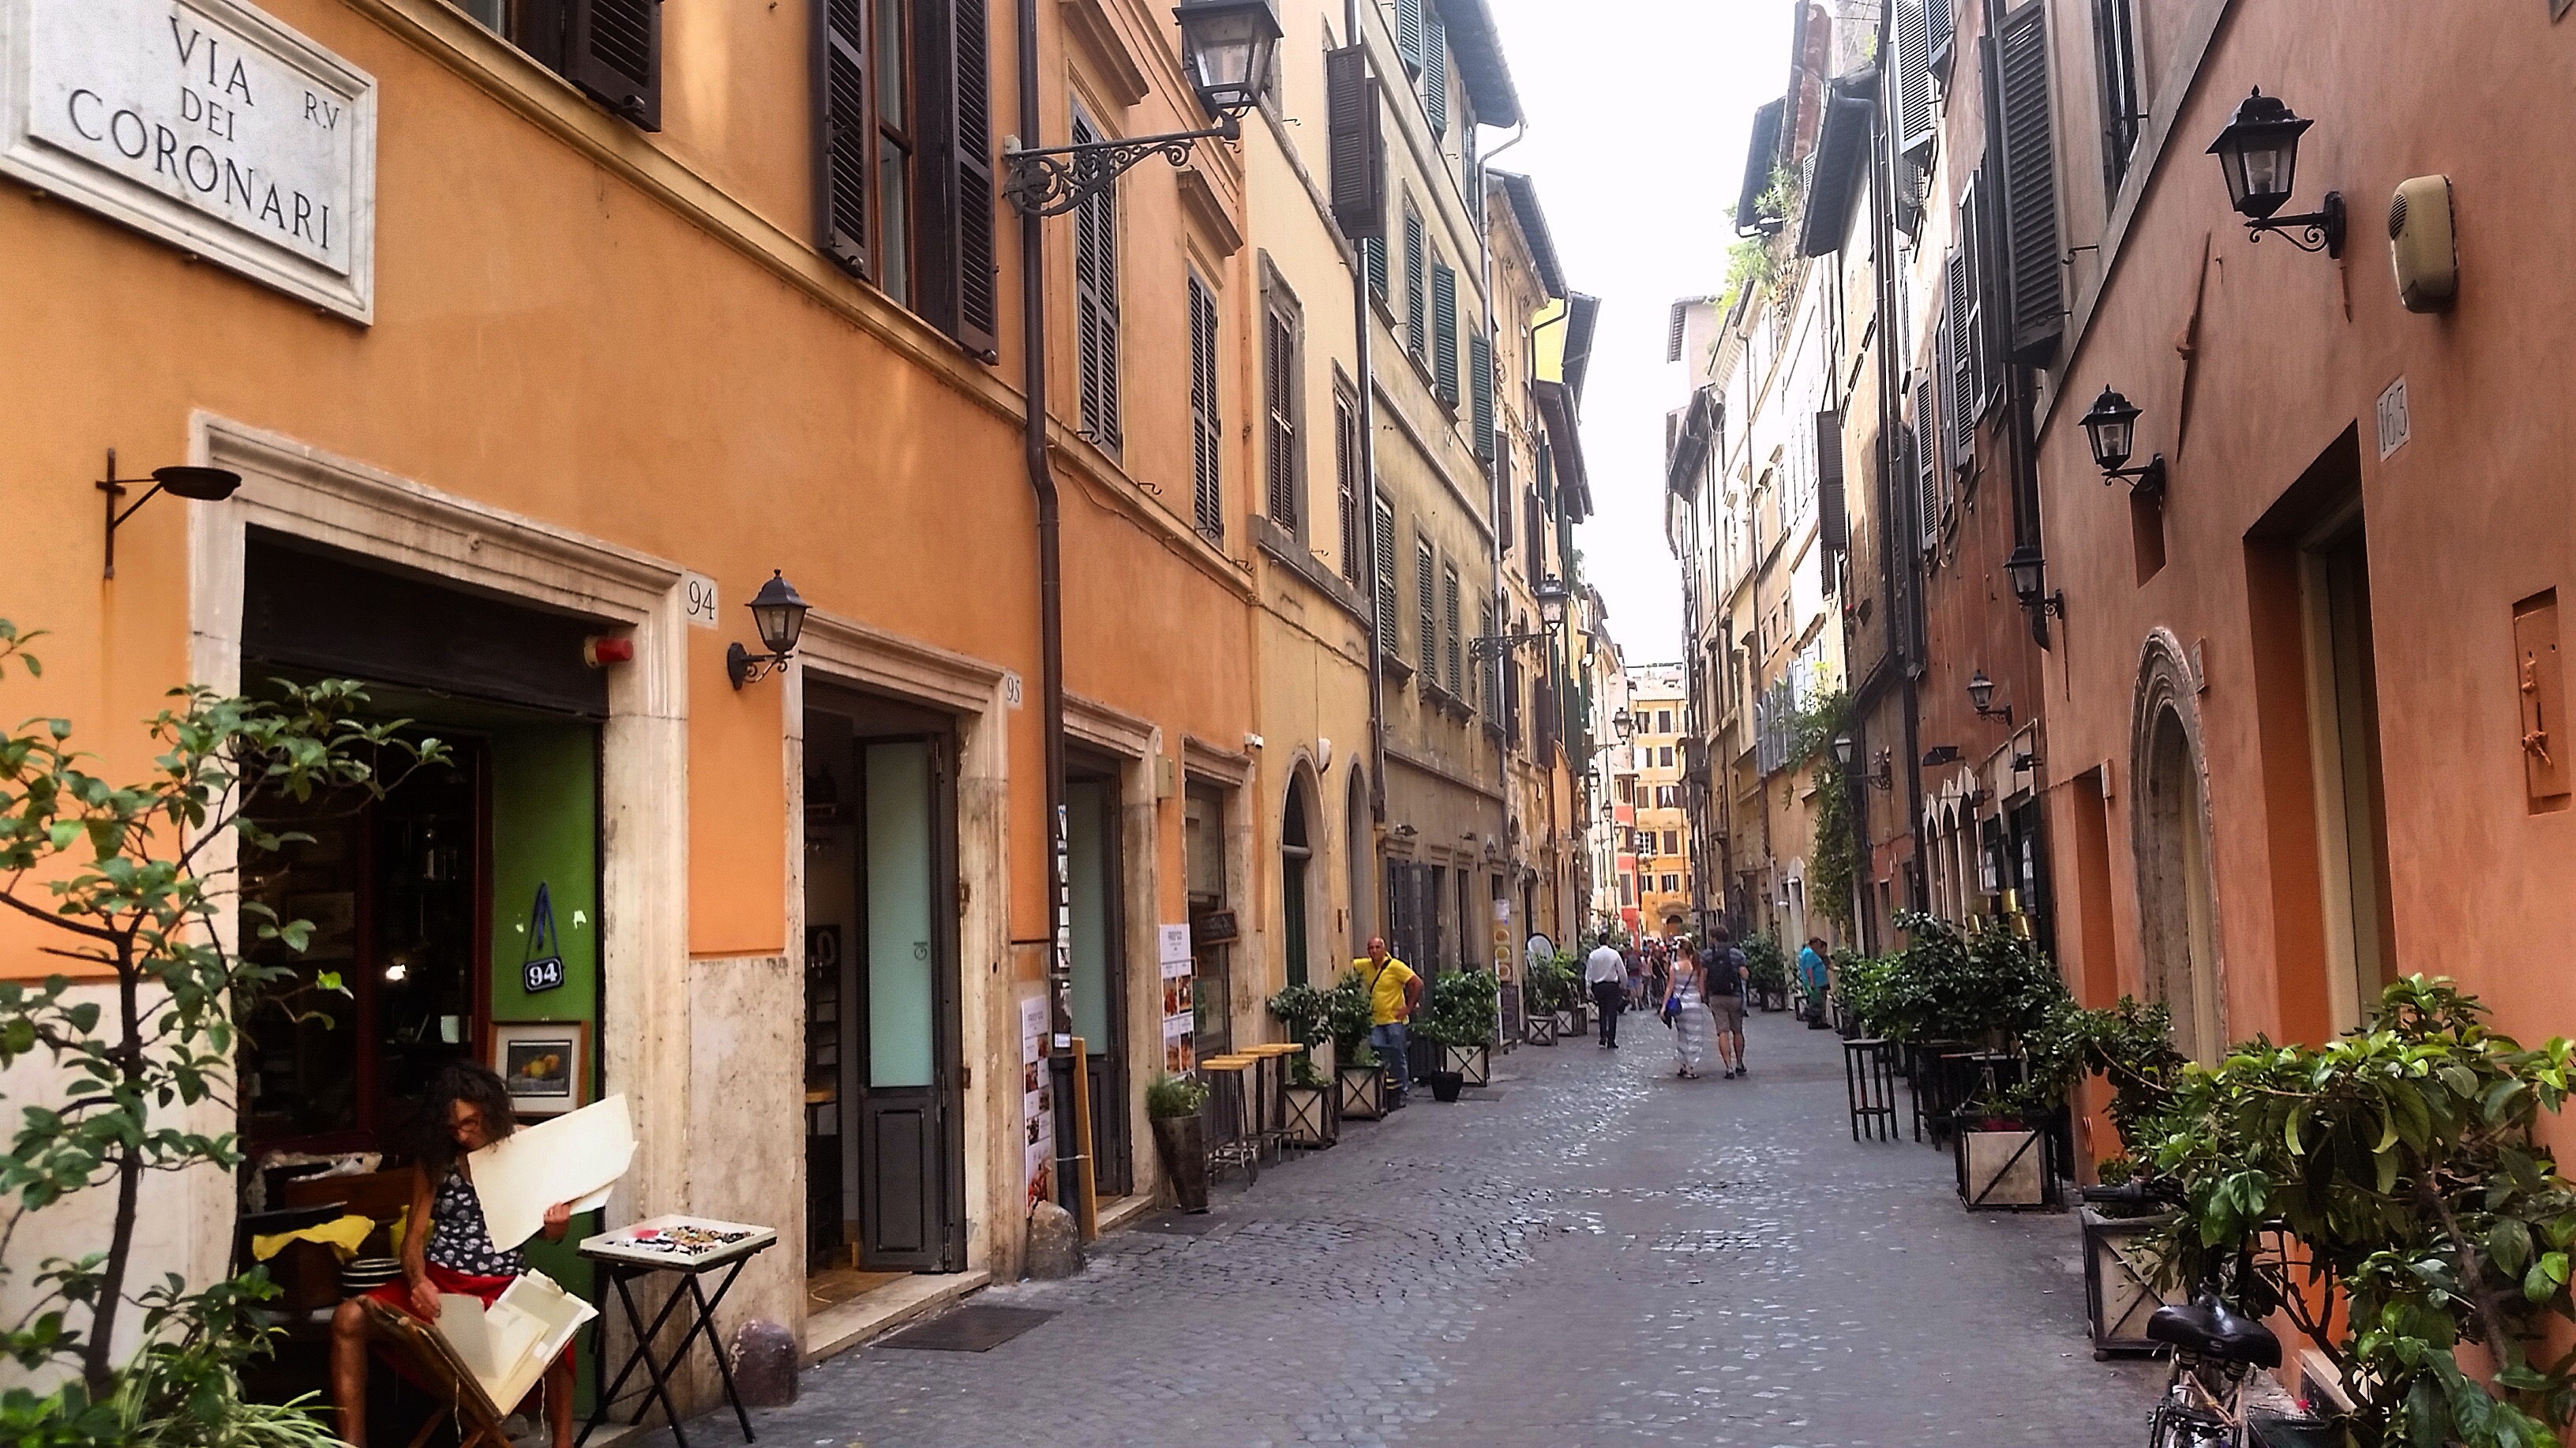 Tranquil-Charming-Via dei Coronari-antique-art shops-Rome.